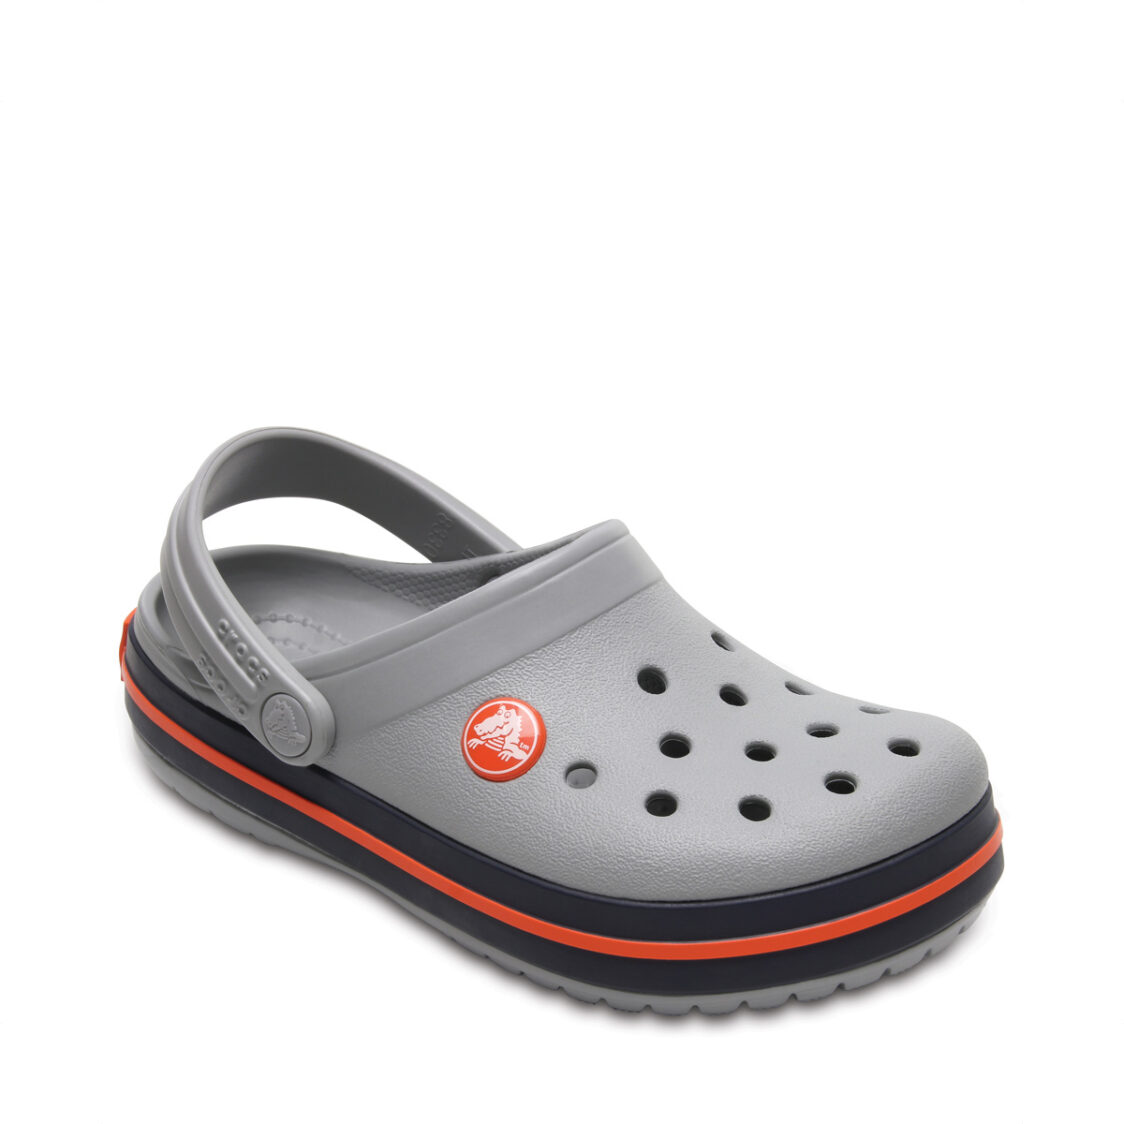 crocs light shoes